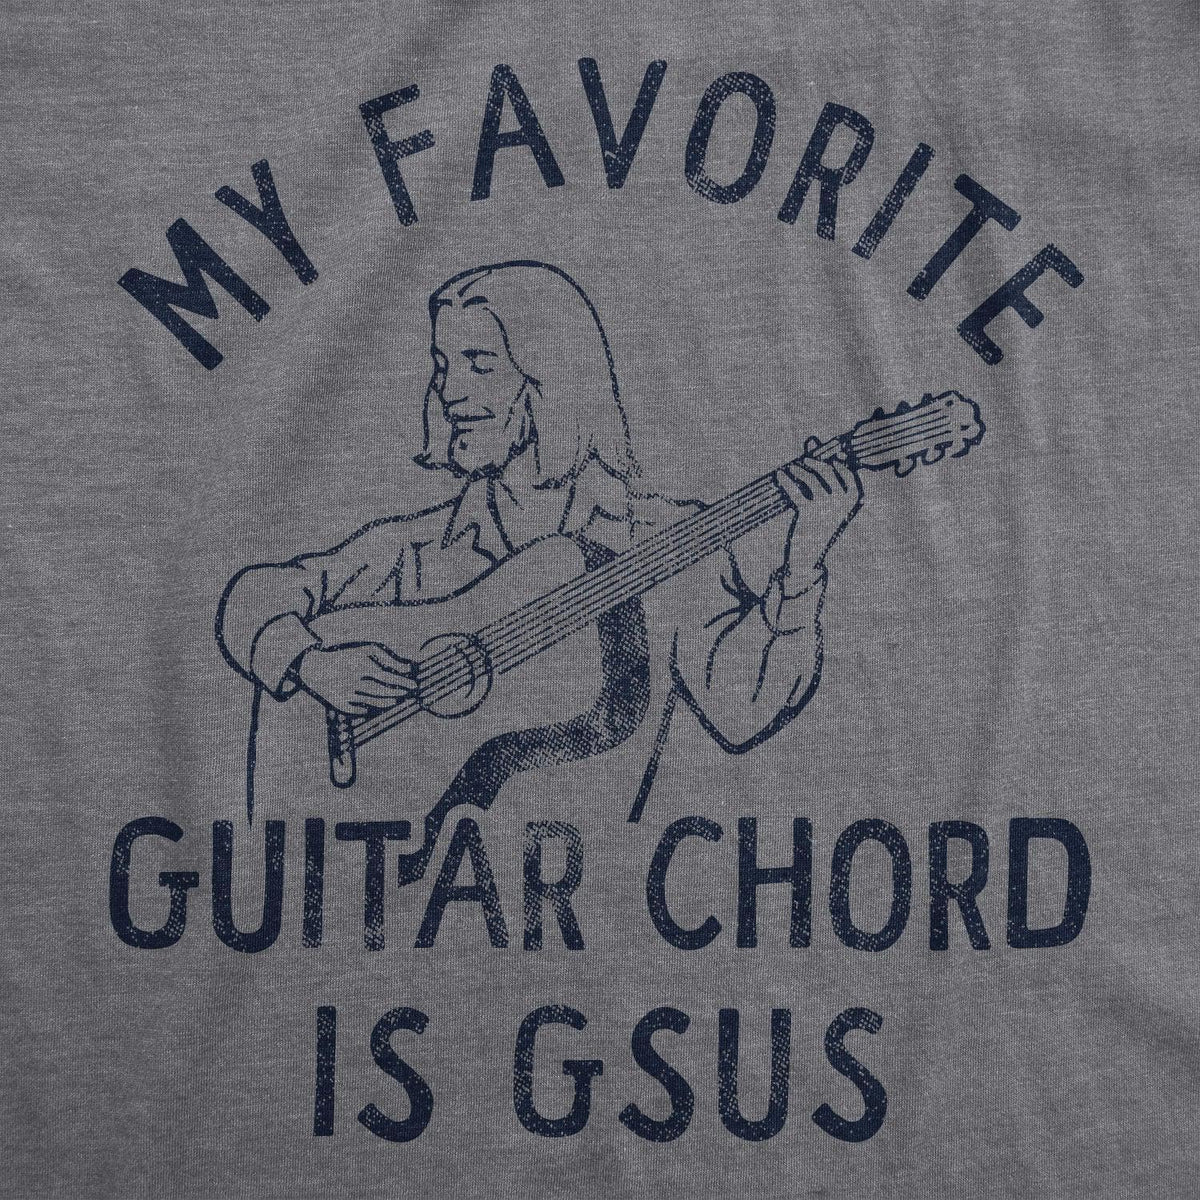 My Favorite Guitar Chord Is GSUS Men&#39;s Tshirt  -  Crazy Dog T-Shirts